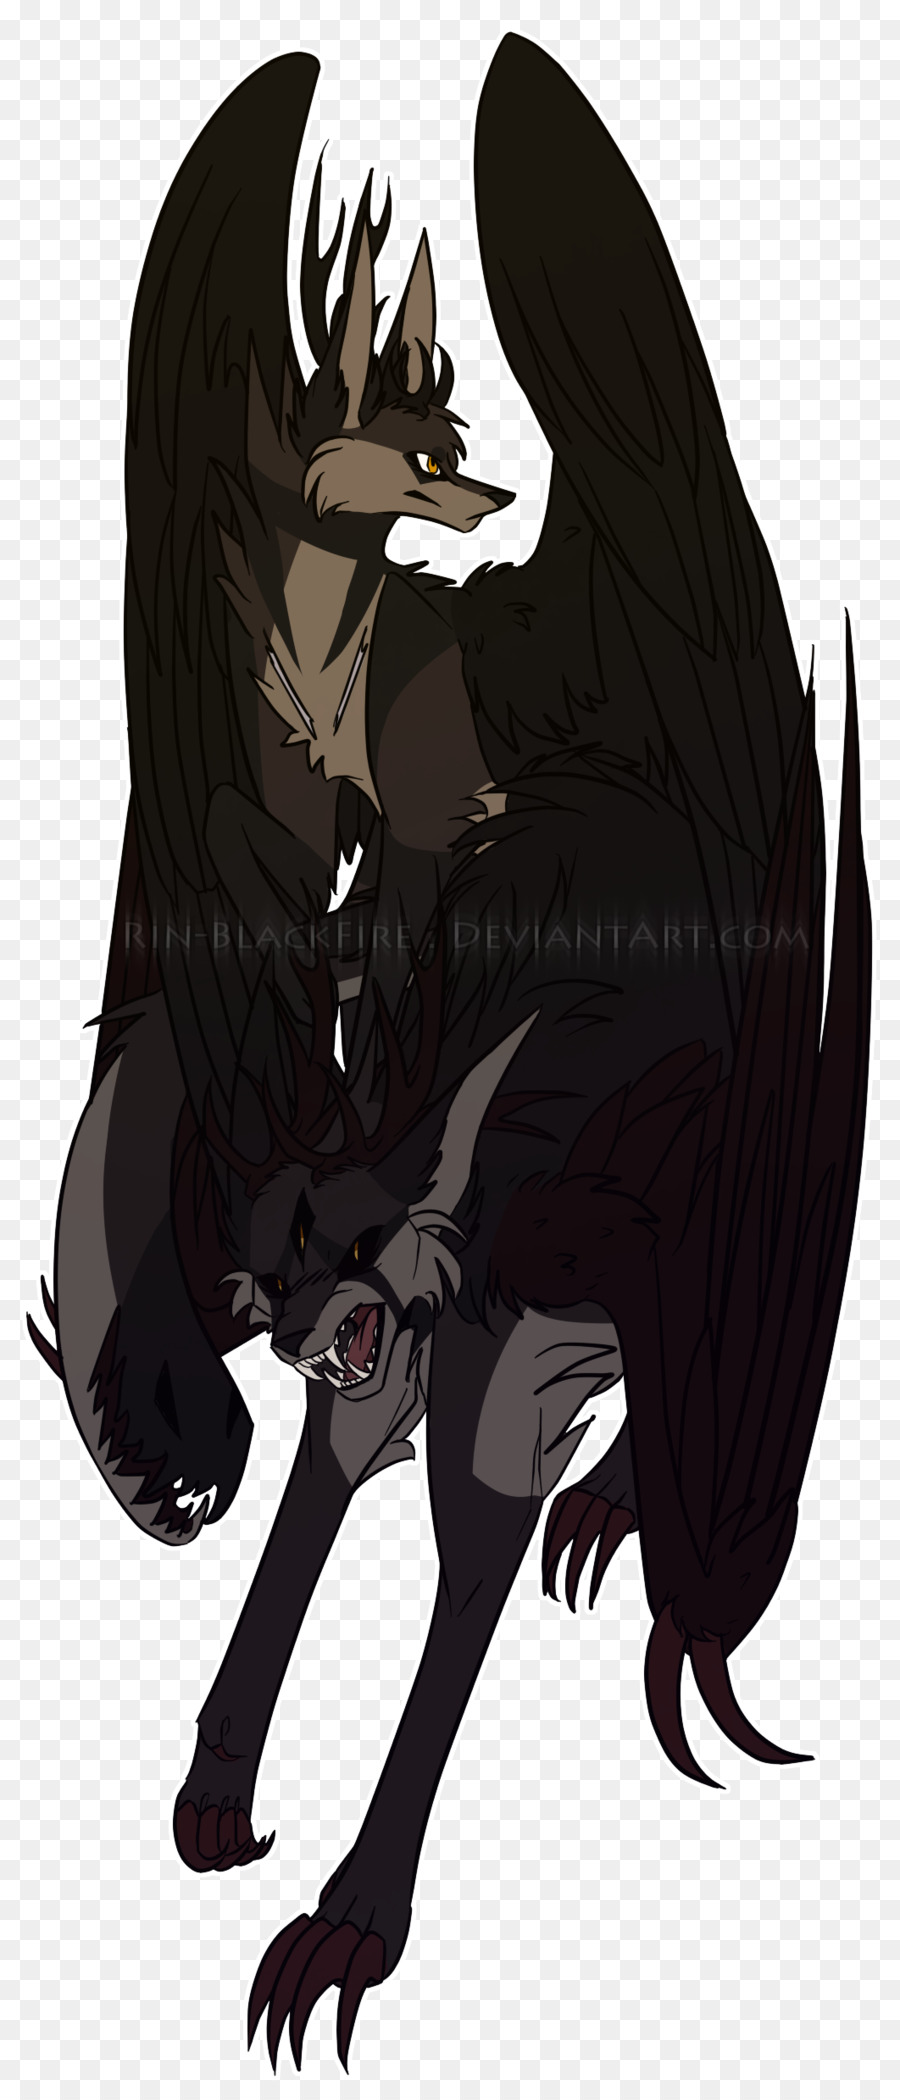 Werwolf-Cartoon-Abbildung Säugetier Dämon - Teufel drinnen